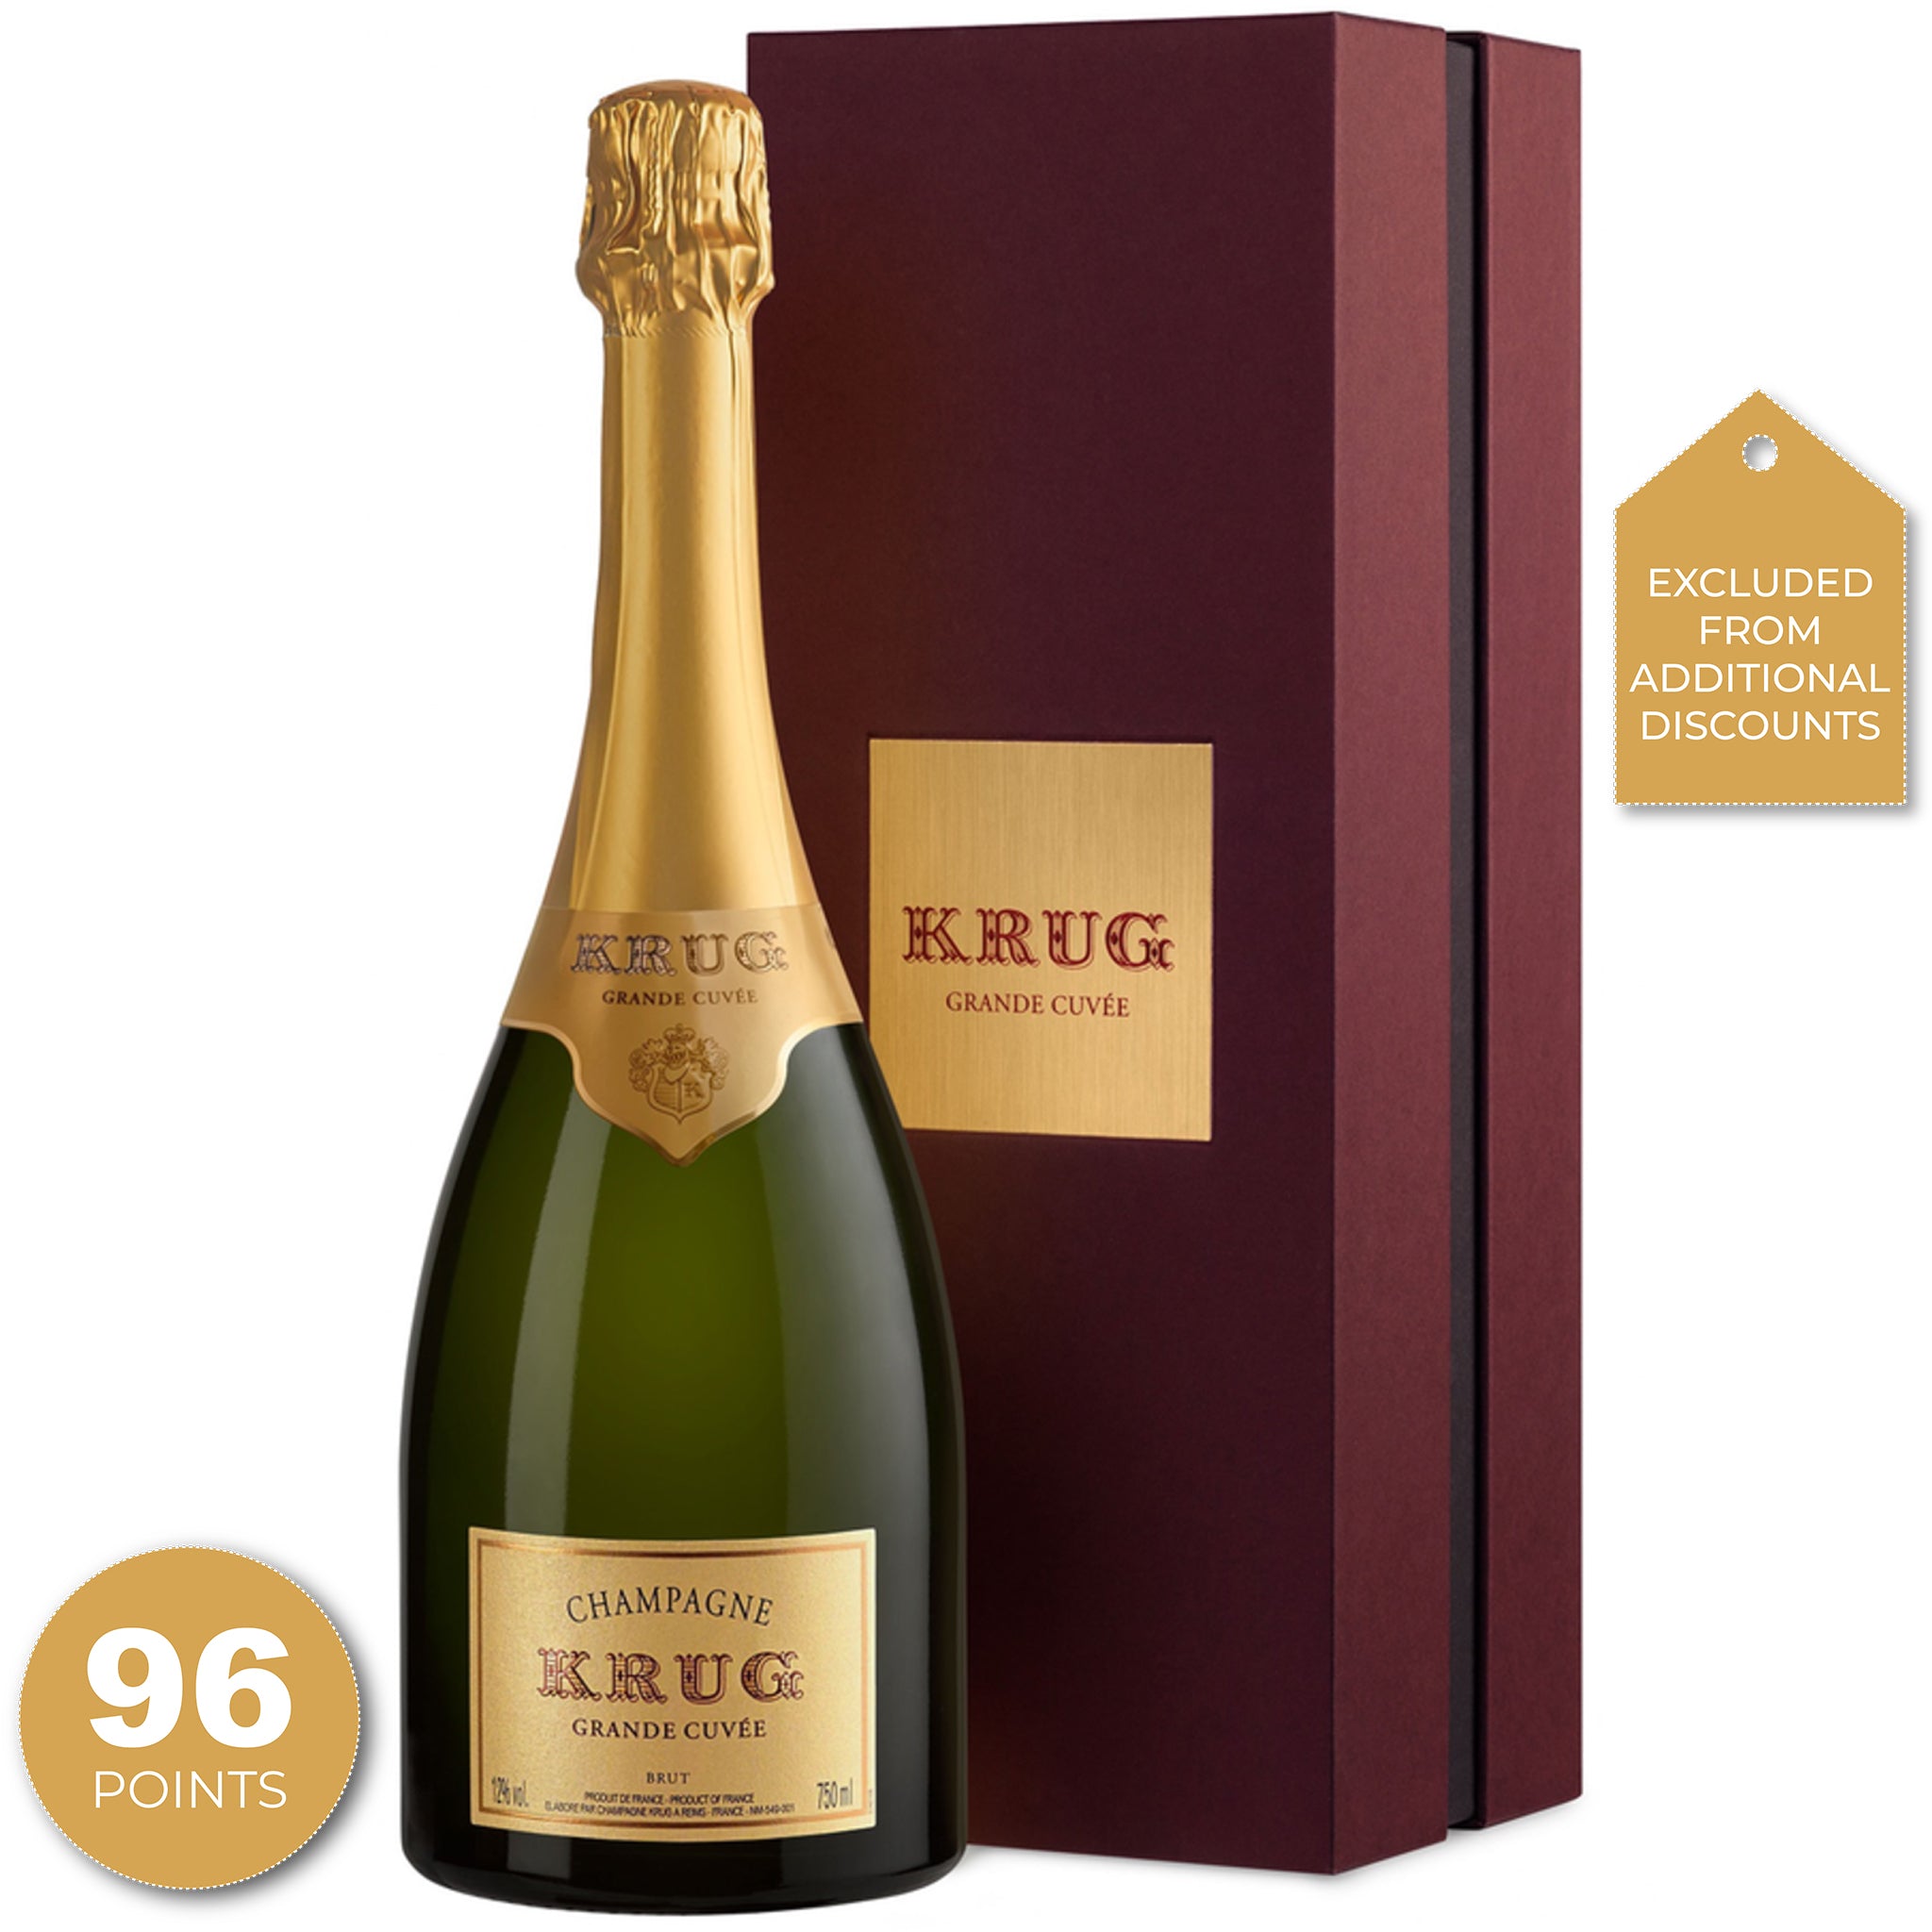 Krug, Grand Cuvée, Champagne, France, NV (750ml)